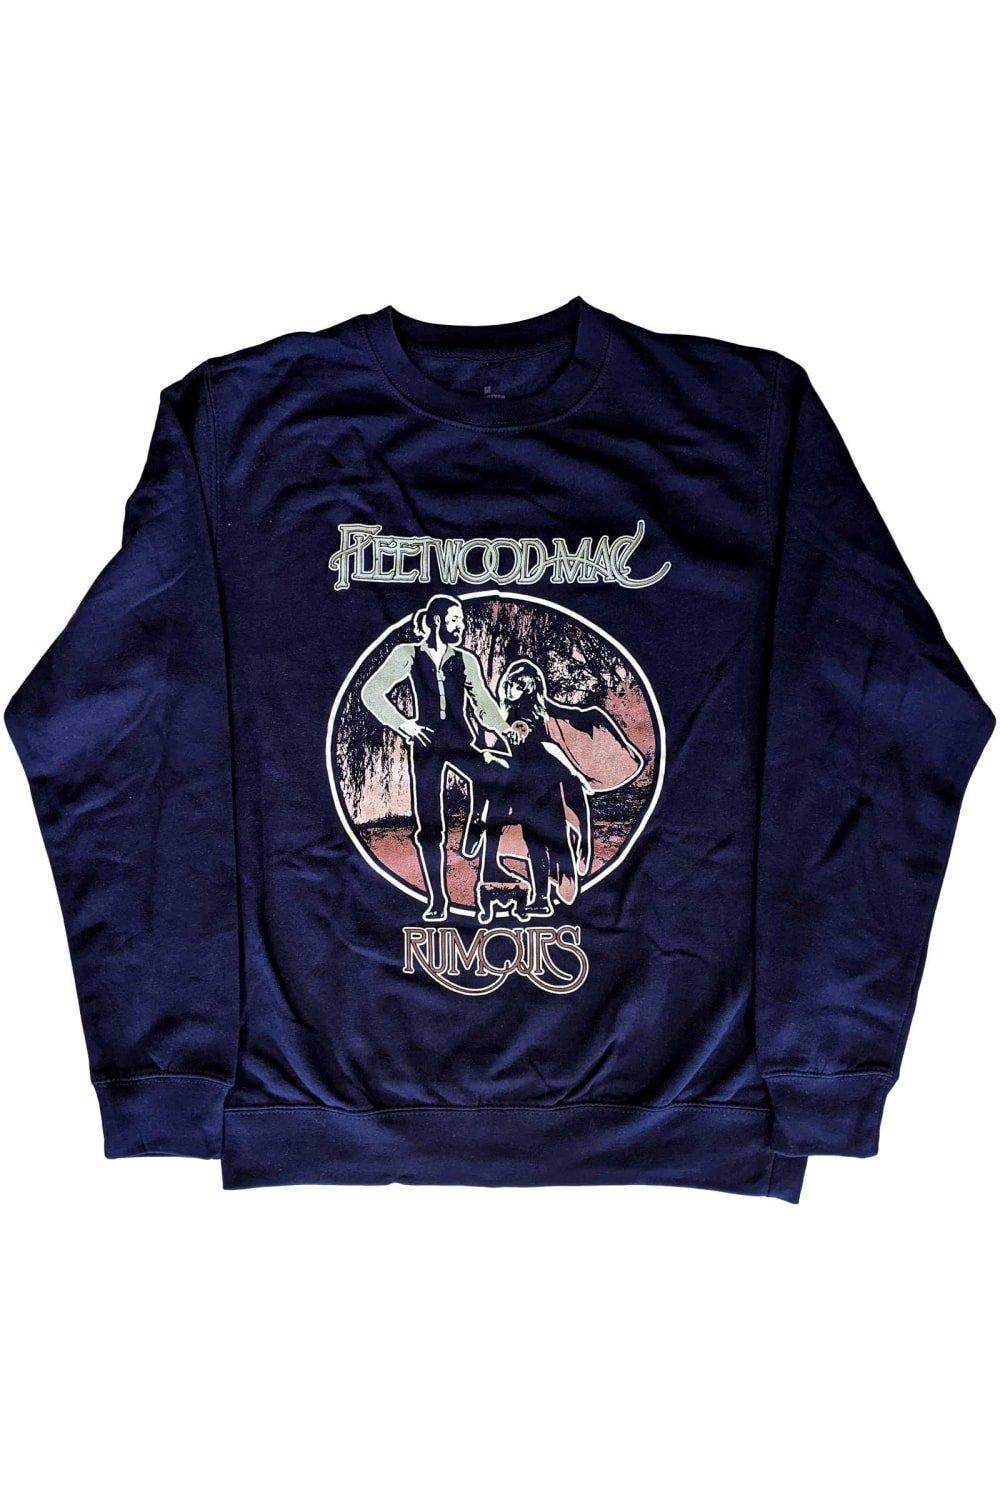 Винтажный свитшот Rumors Fleetwood Mac, темно-синий футболка скинни rumors fleetwood mac белый